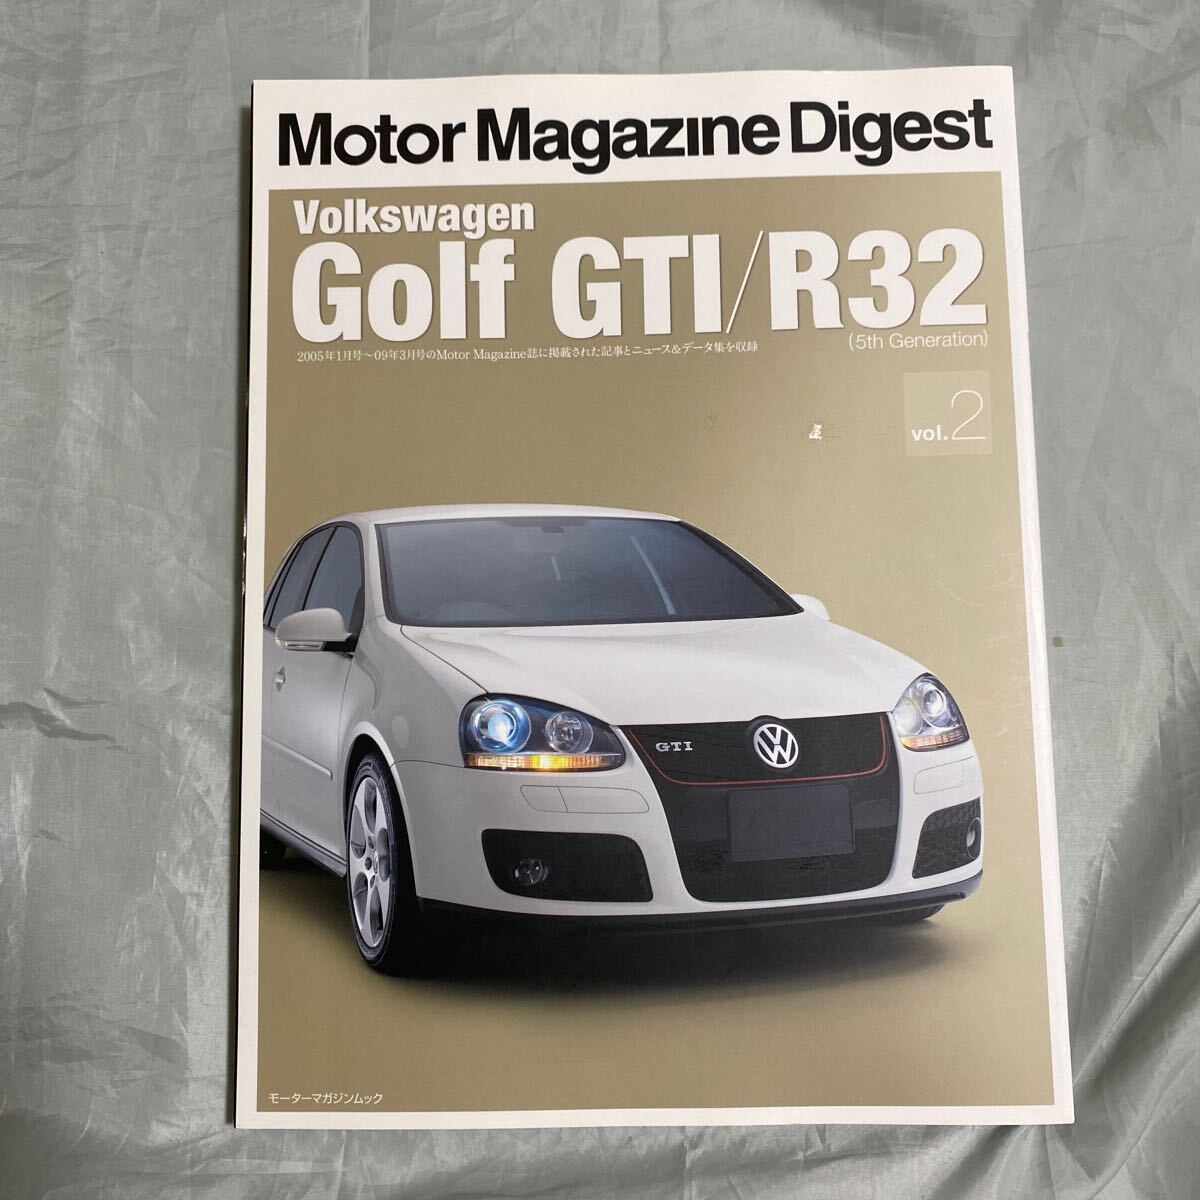 ■Motor Magazine Digest フォルクスワーゲンGolf GTI/R32(5th Generation)■ゴルフ■２０１０年の画像1